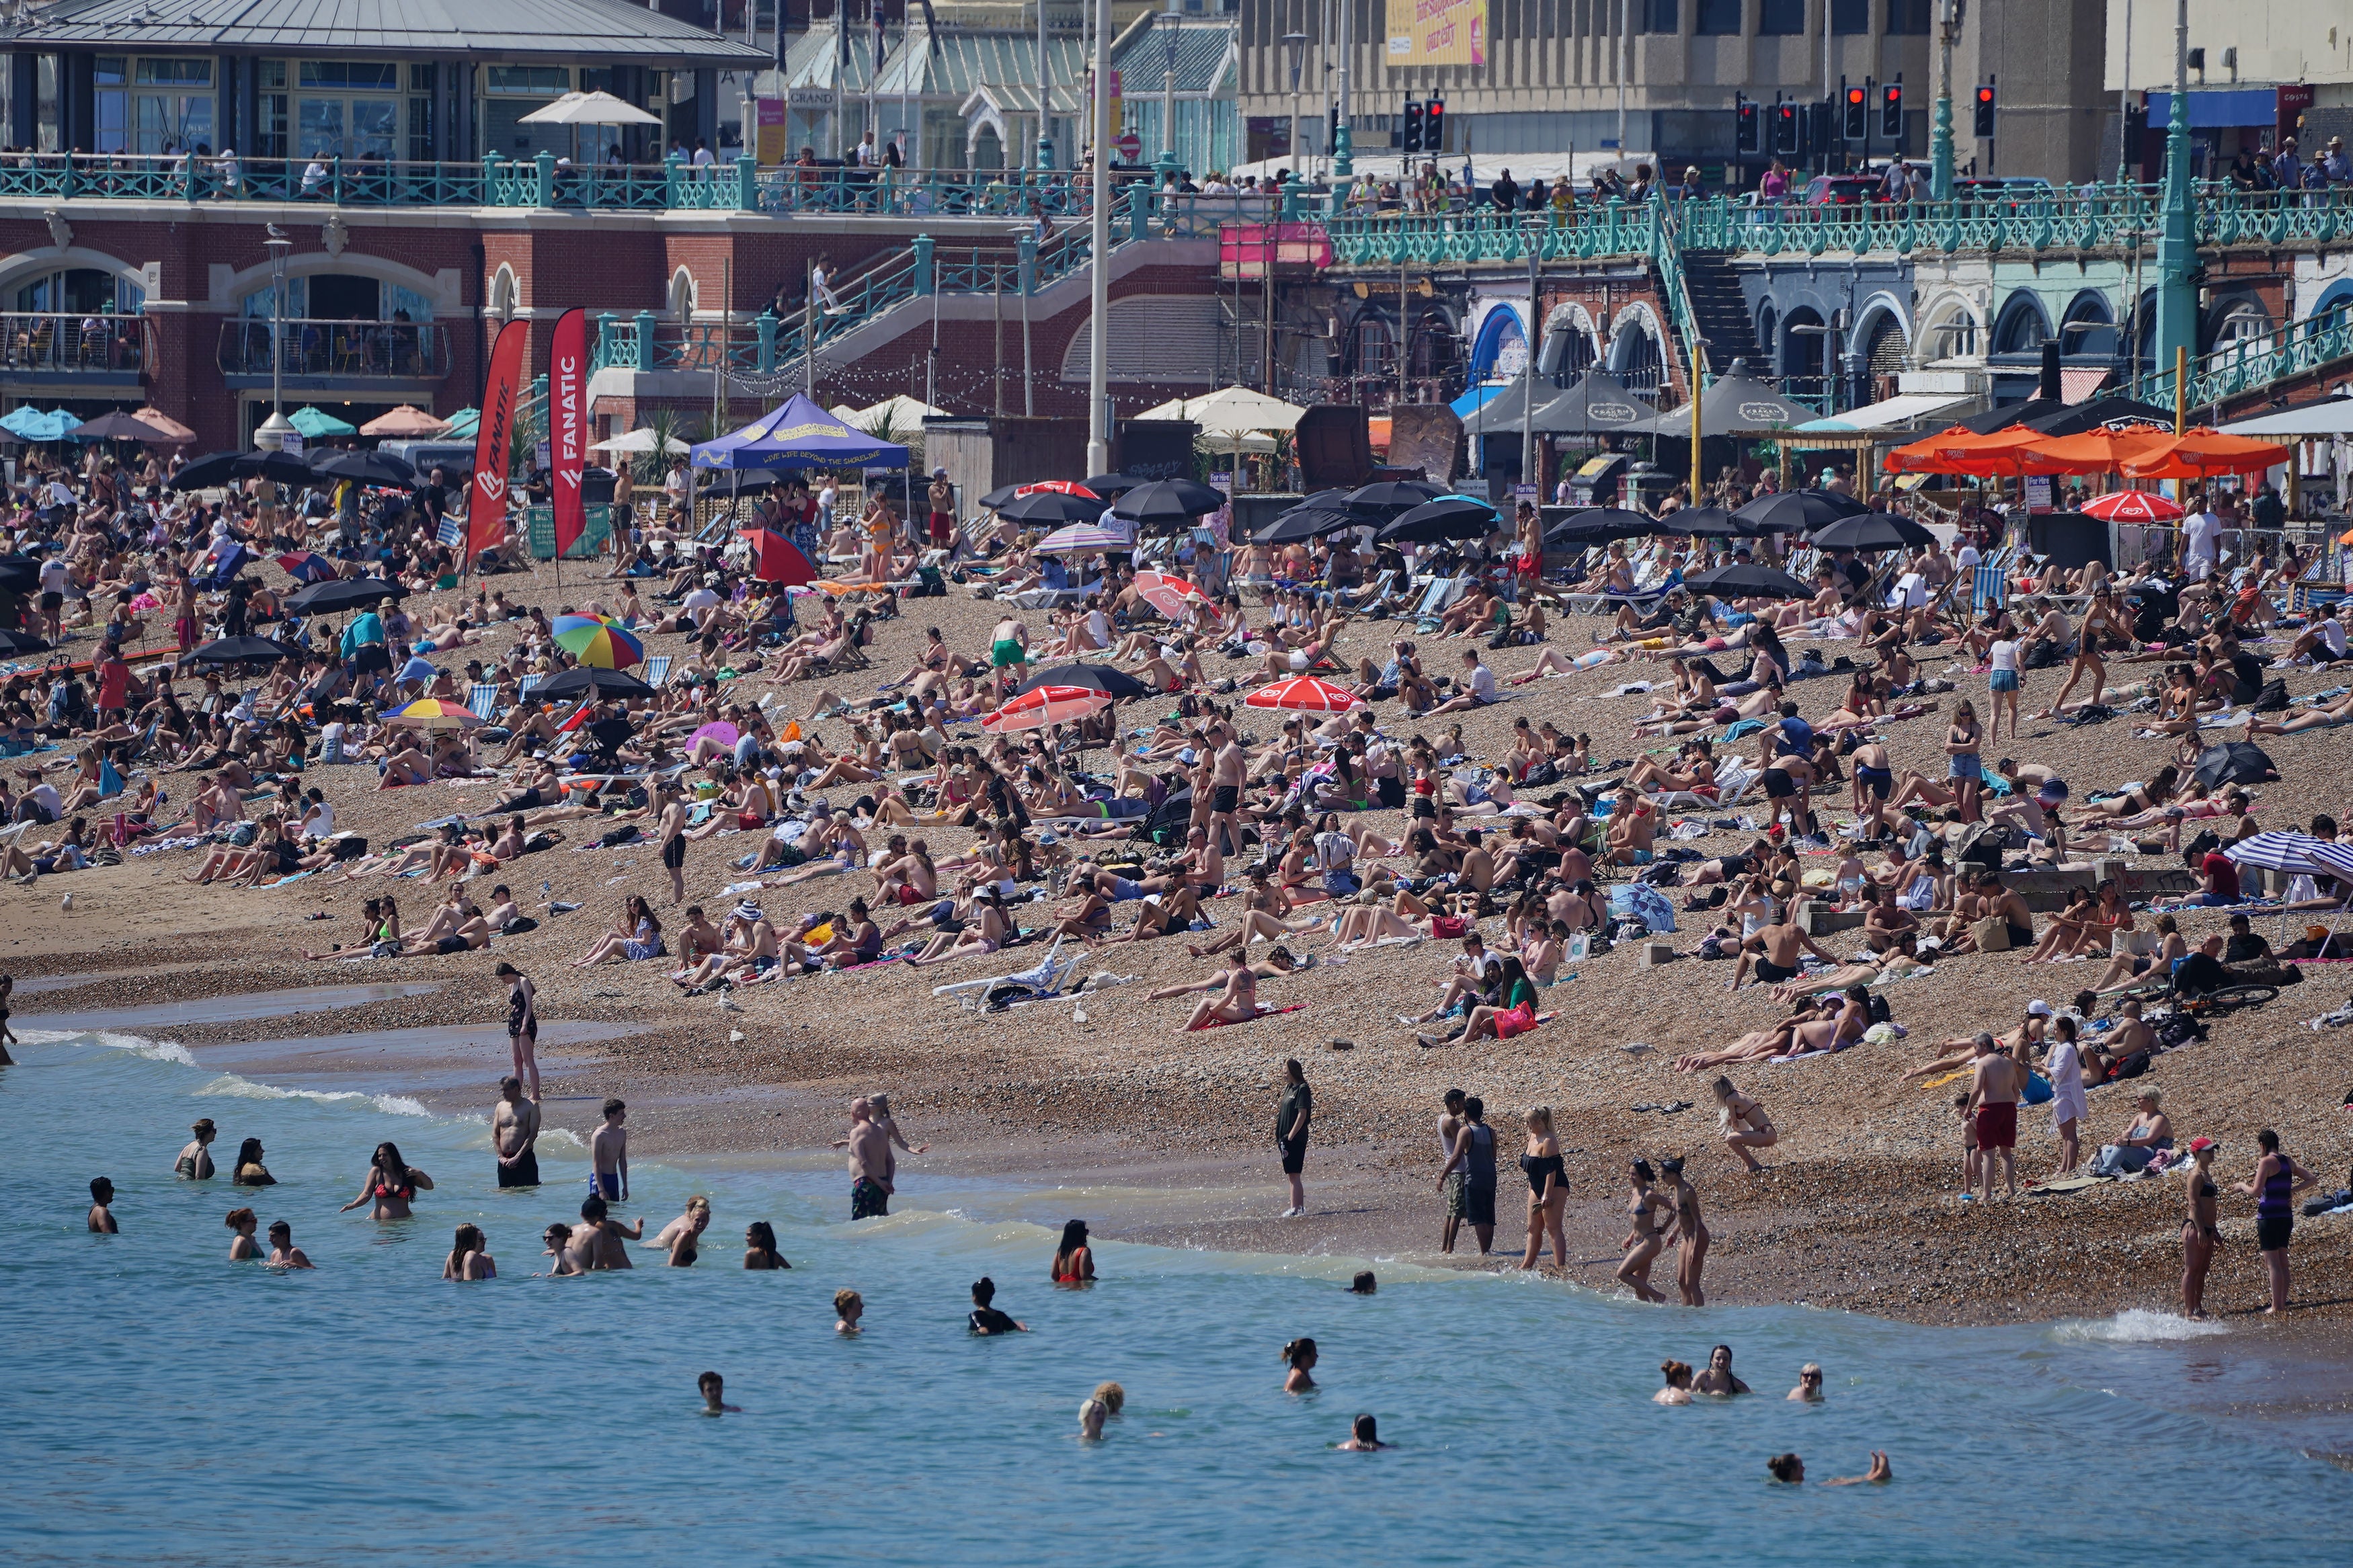 Crowds of people enjoying the sunshine on Brighton beach